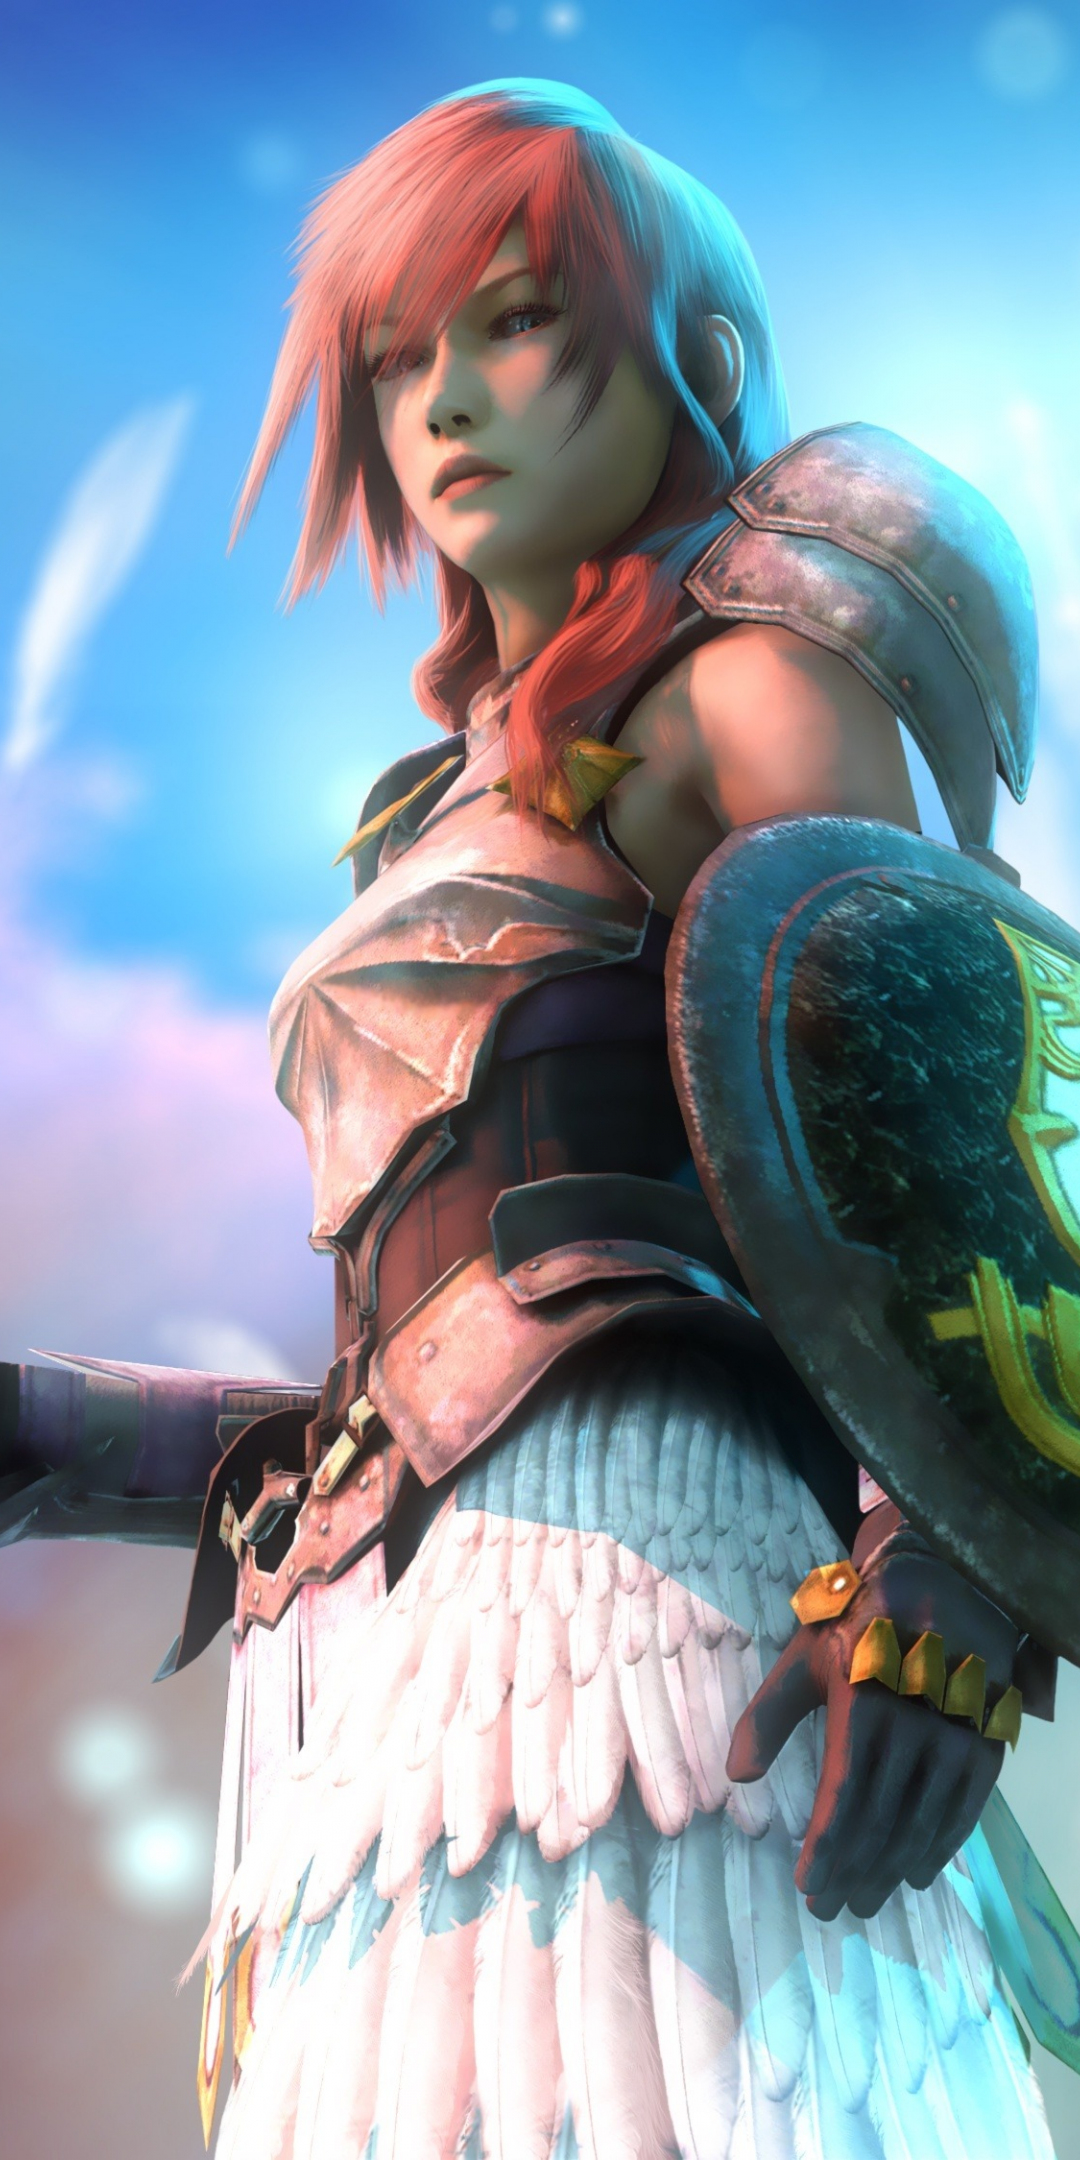 Final fantasy, video game, girl warrior, lightning, 1080x2160 wallpaper